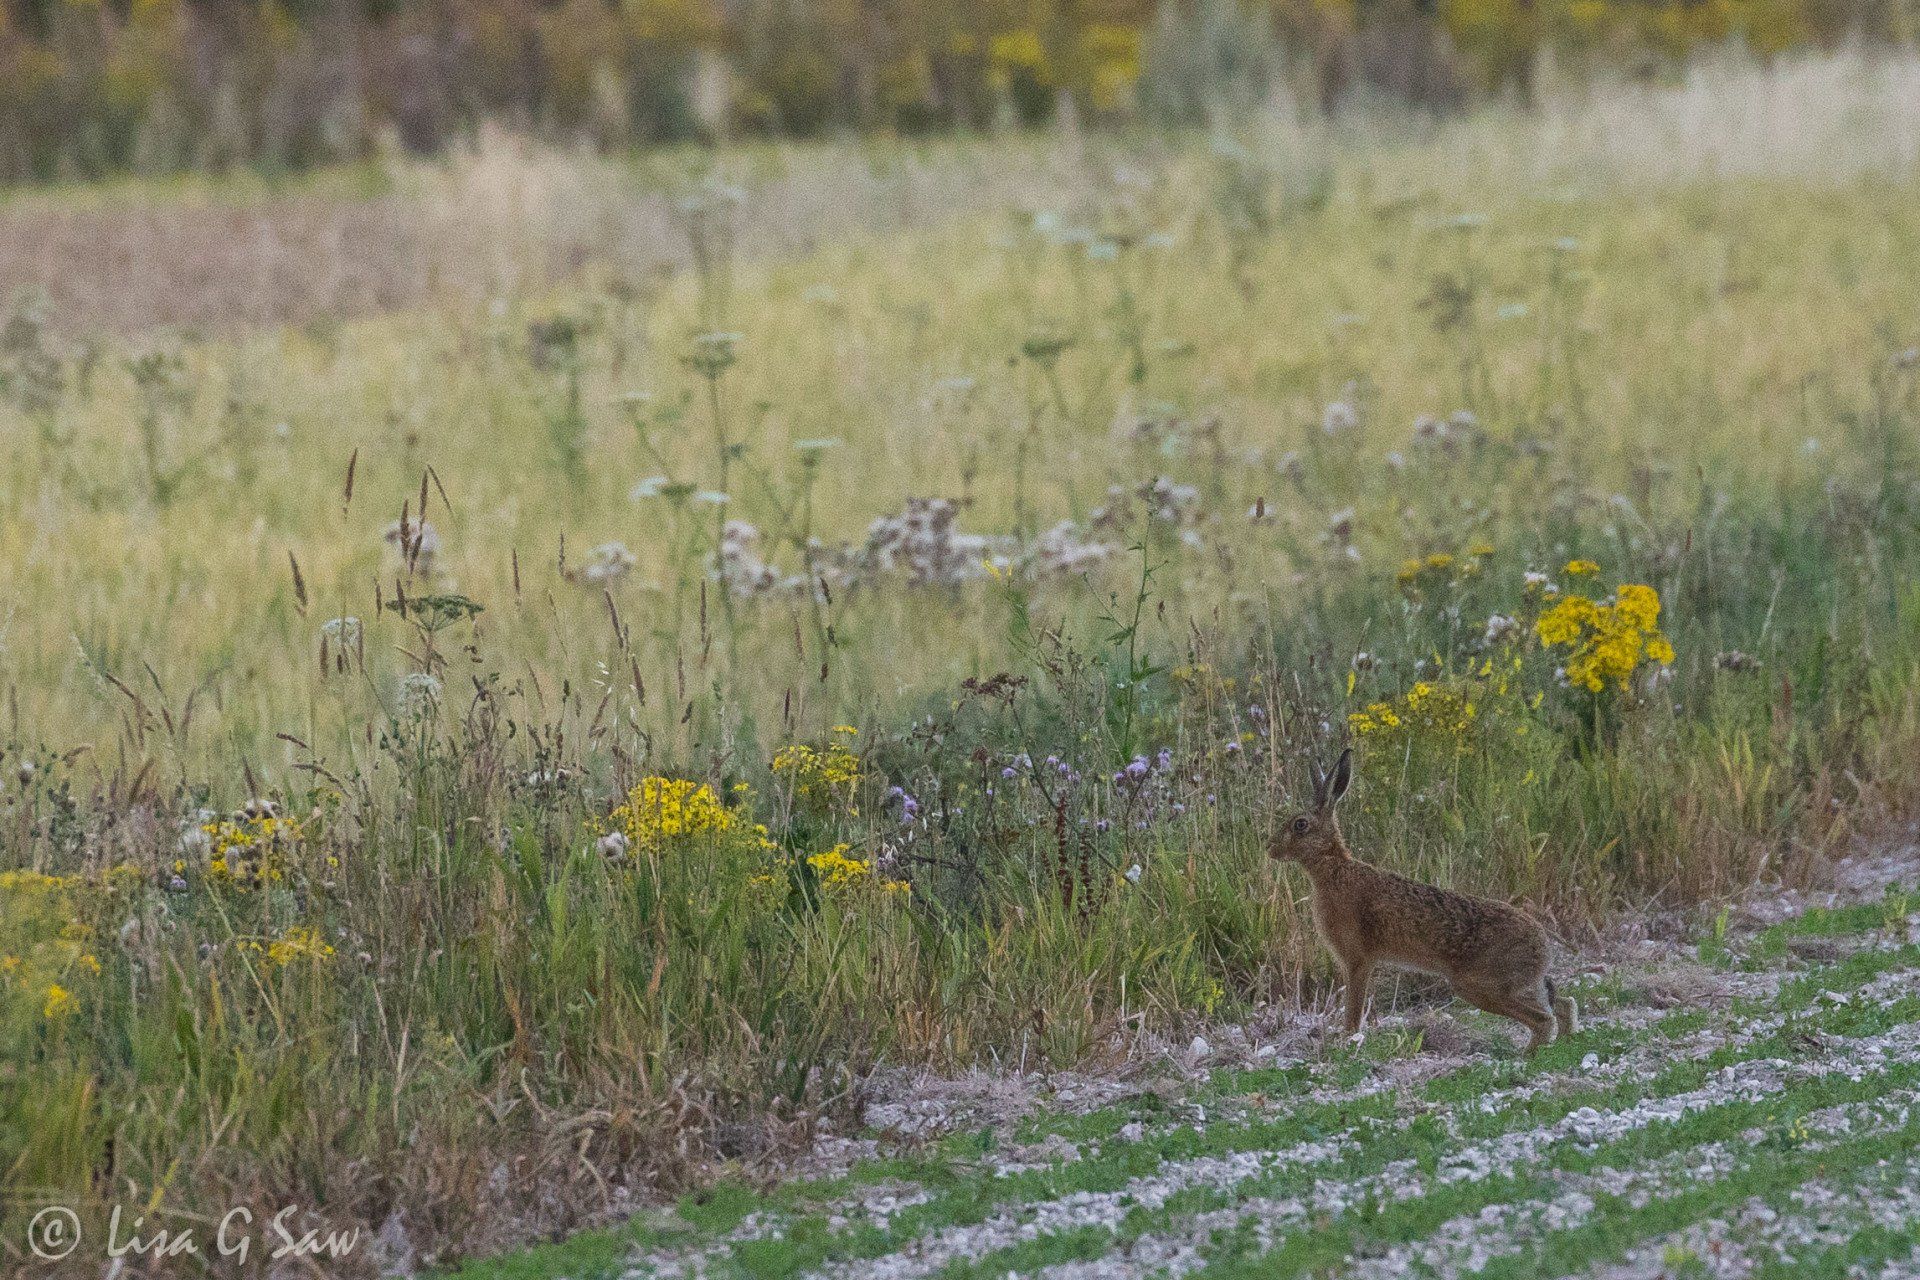 Hare alert on edge of field